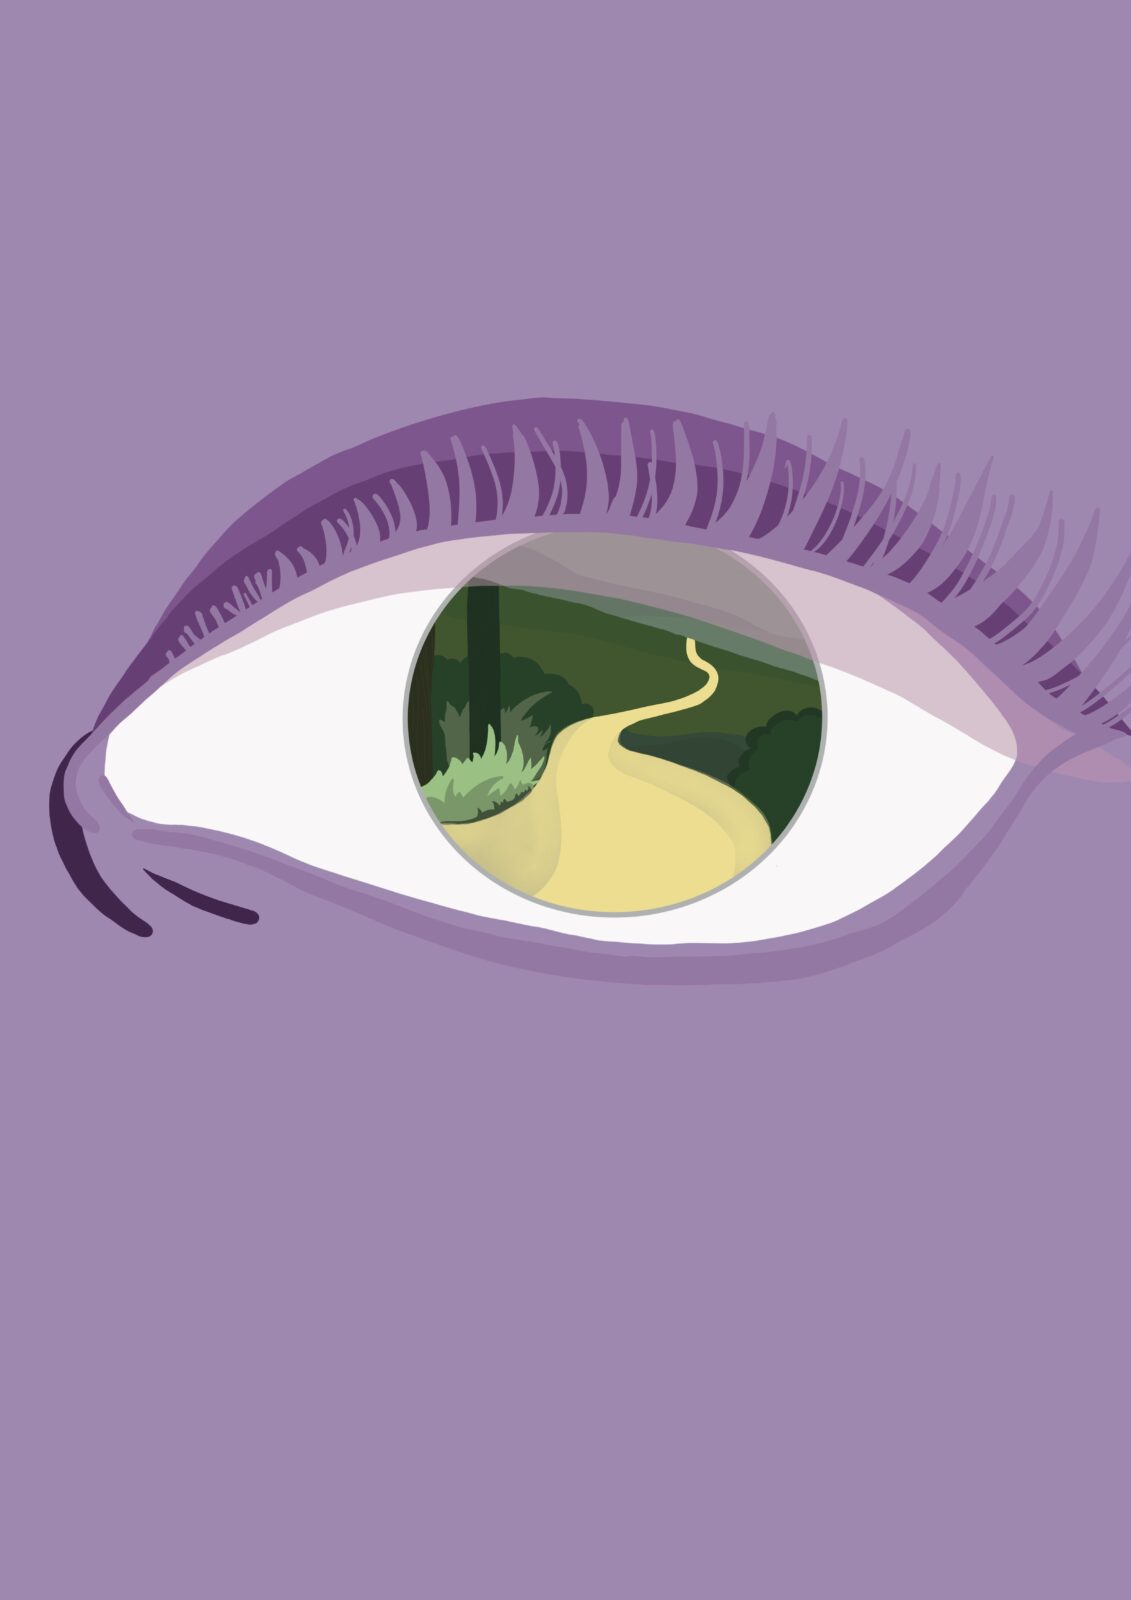 Illustration of a forest scene inside the iris of an eye.